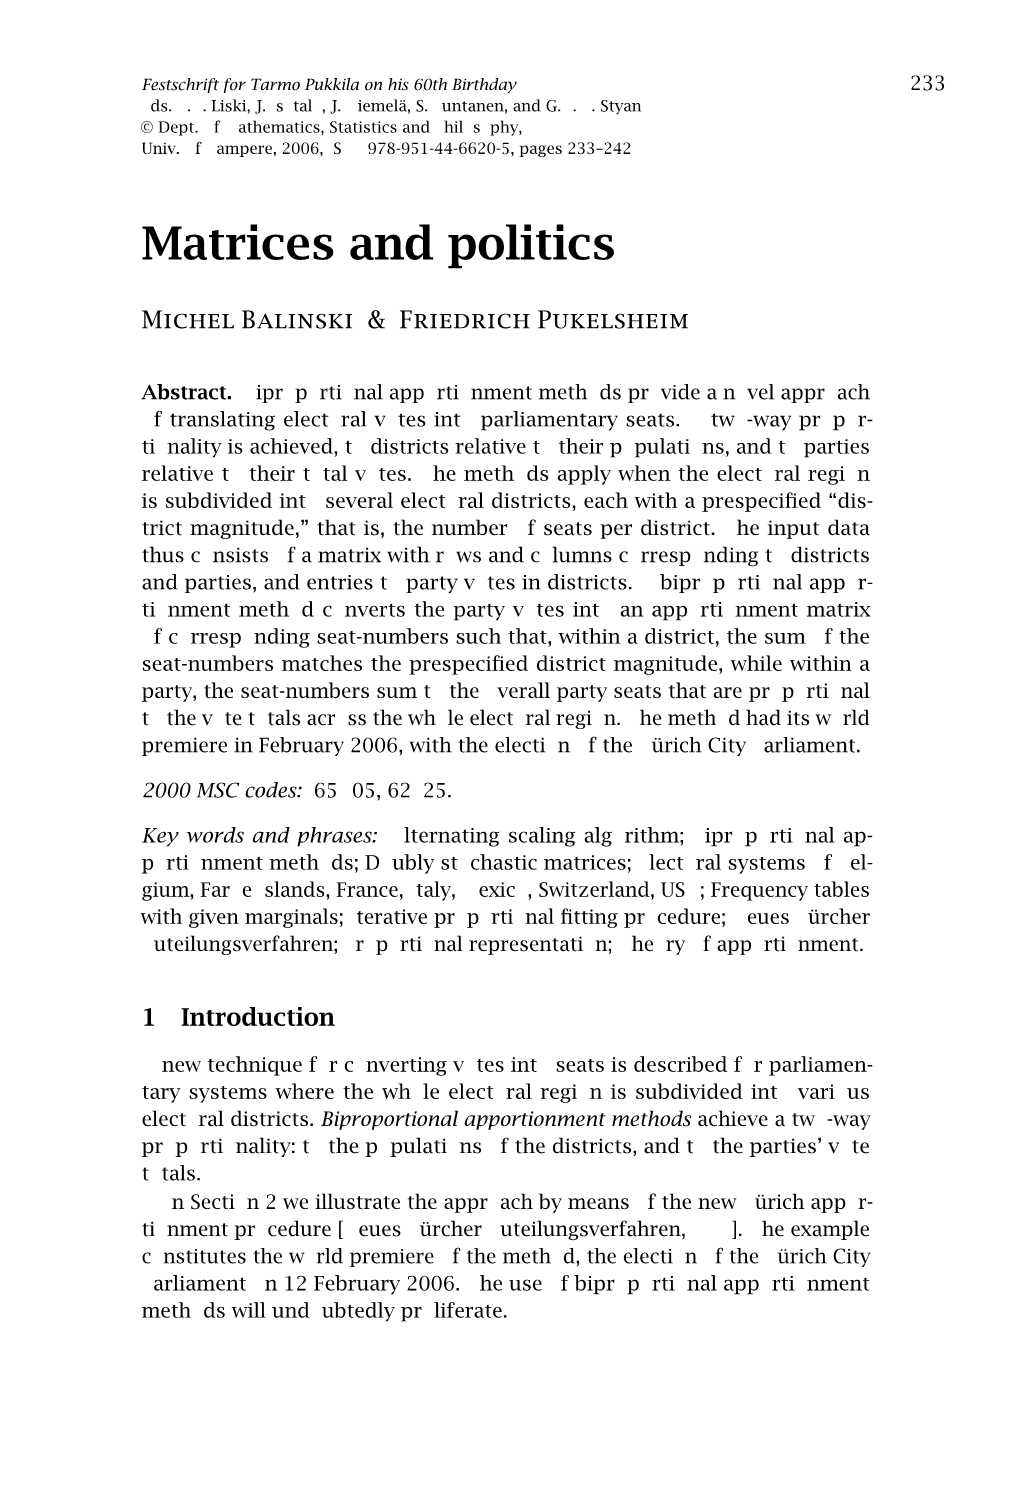 Matrices and Politics